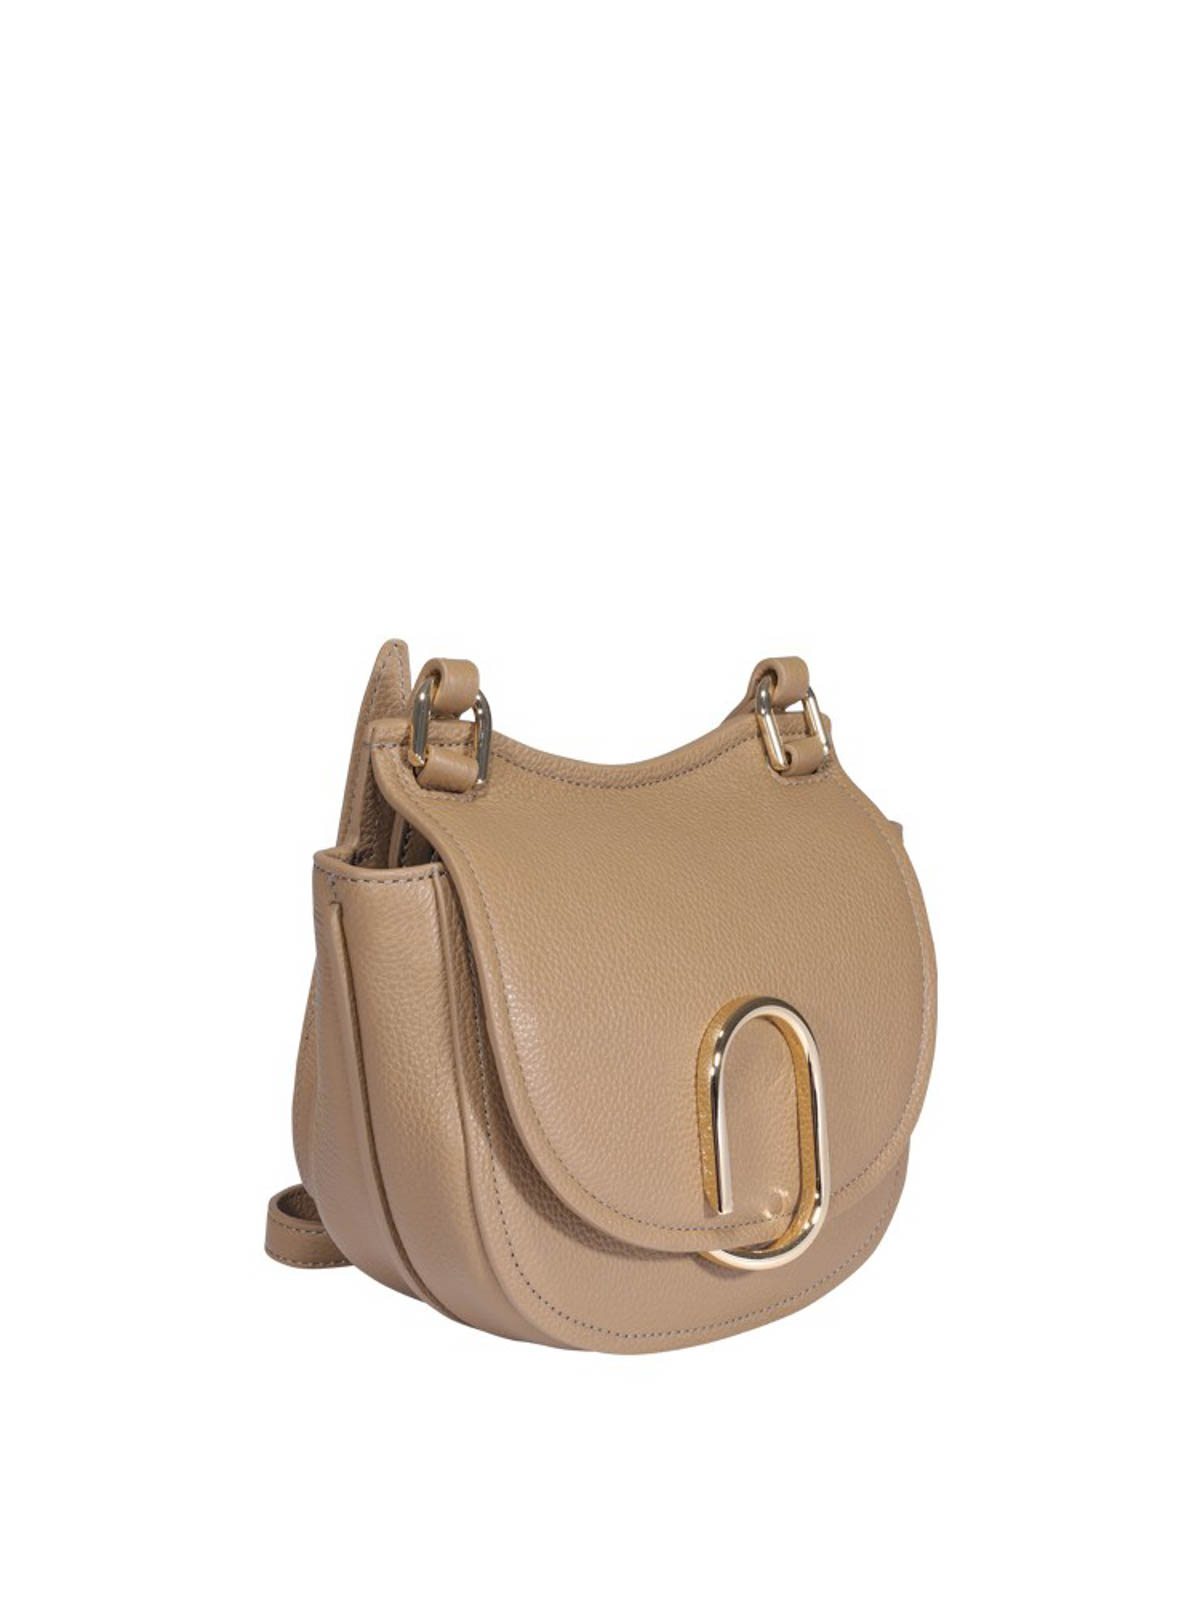 Alix leather handbag